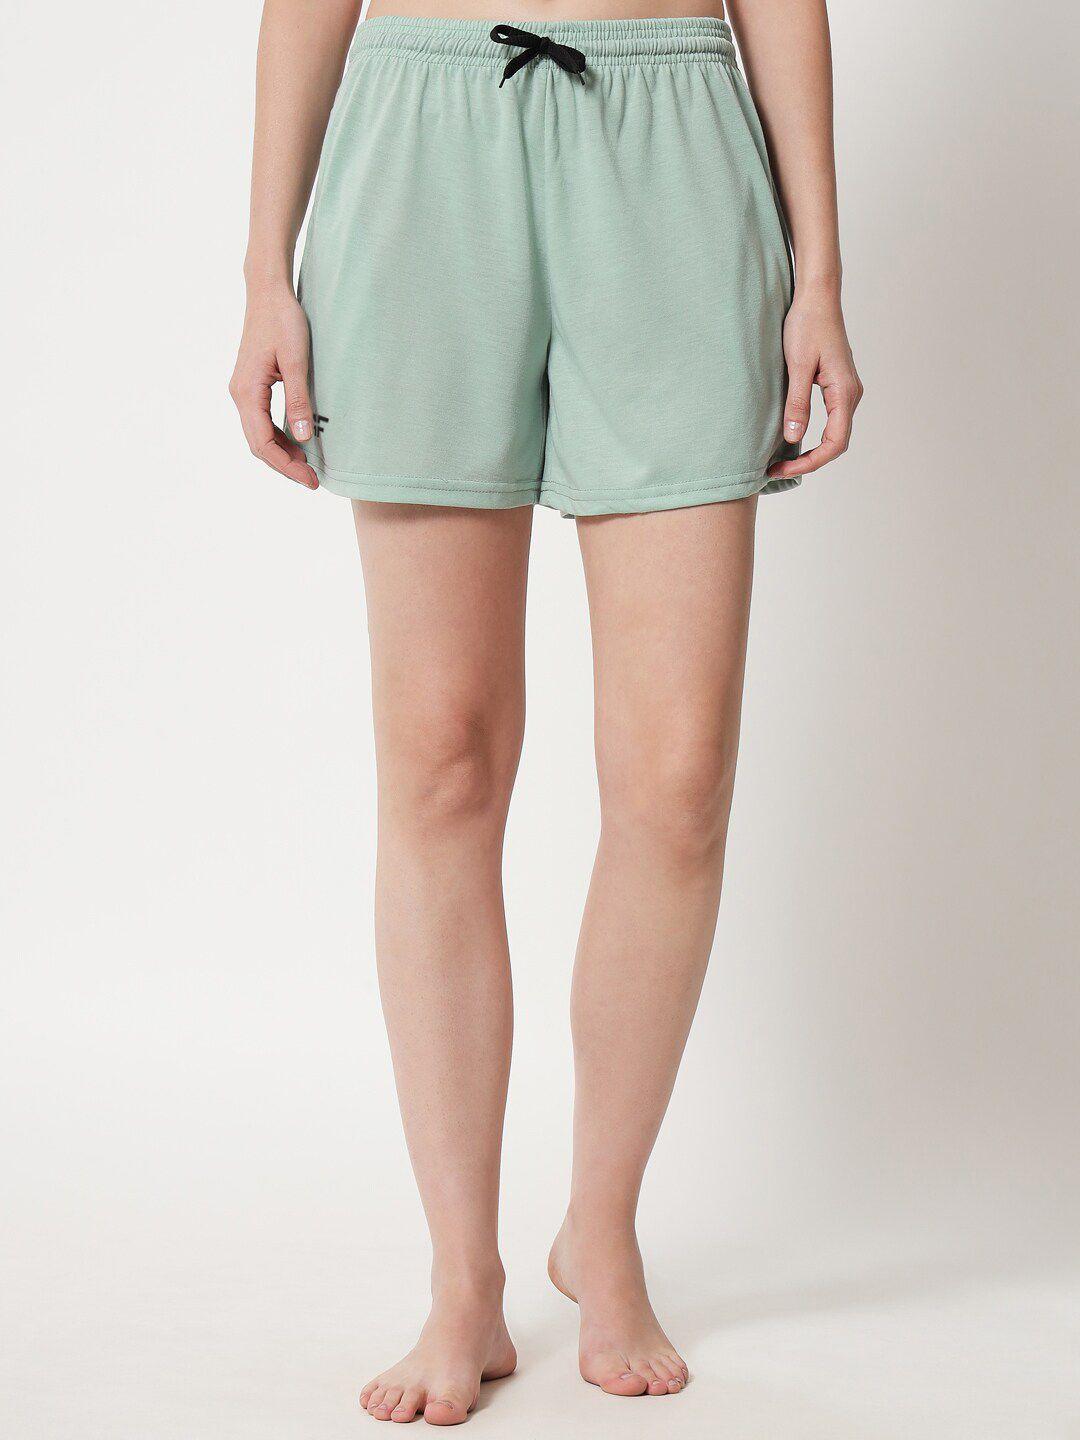 fflirtygo women green shorts